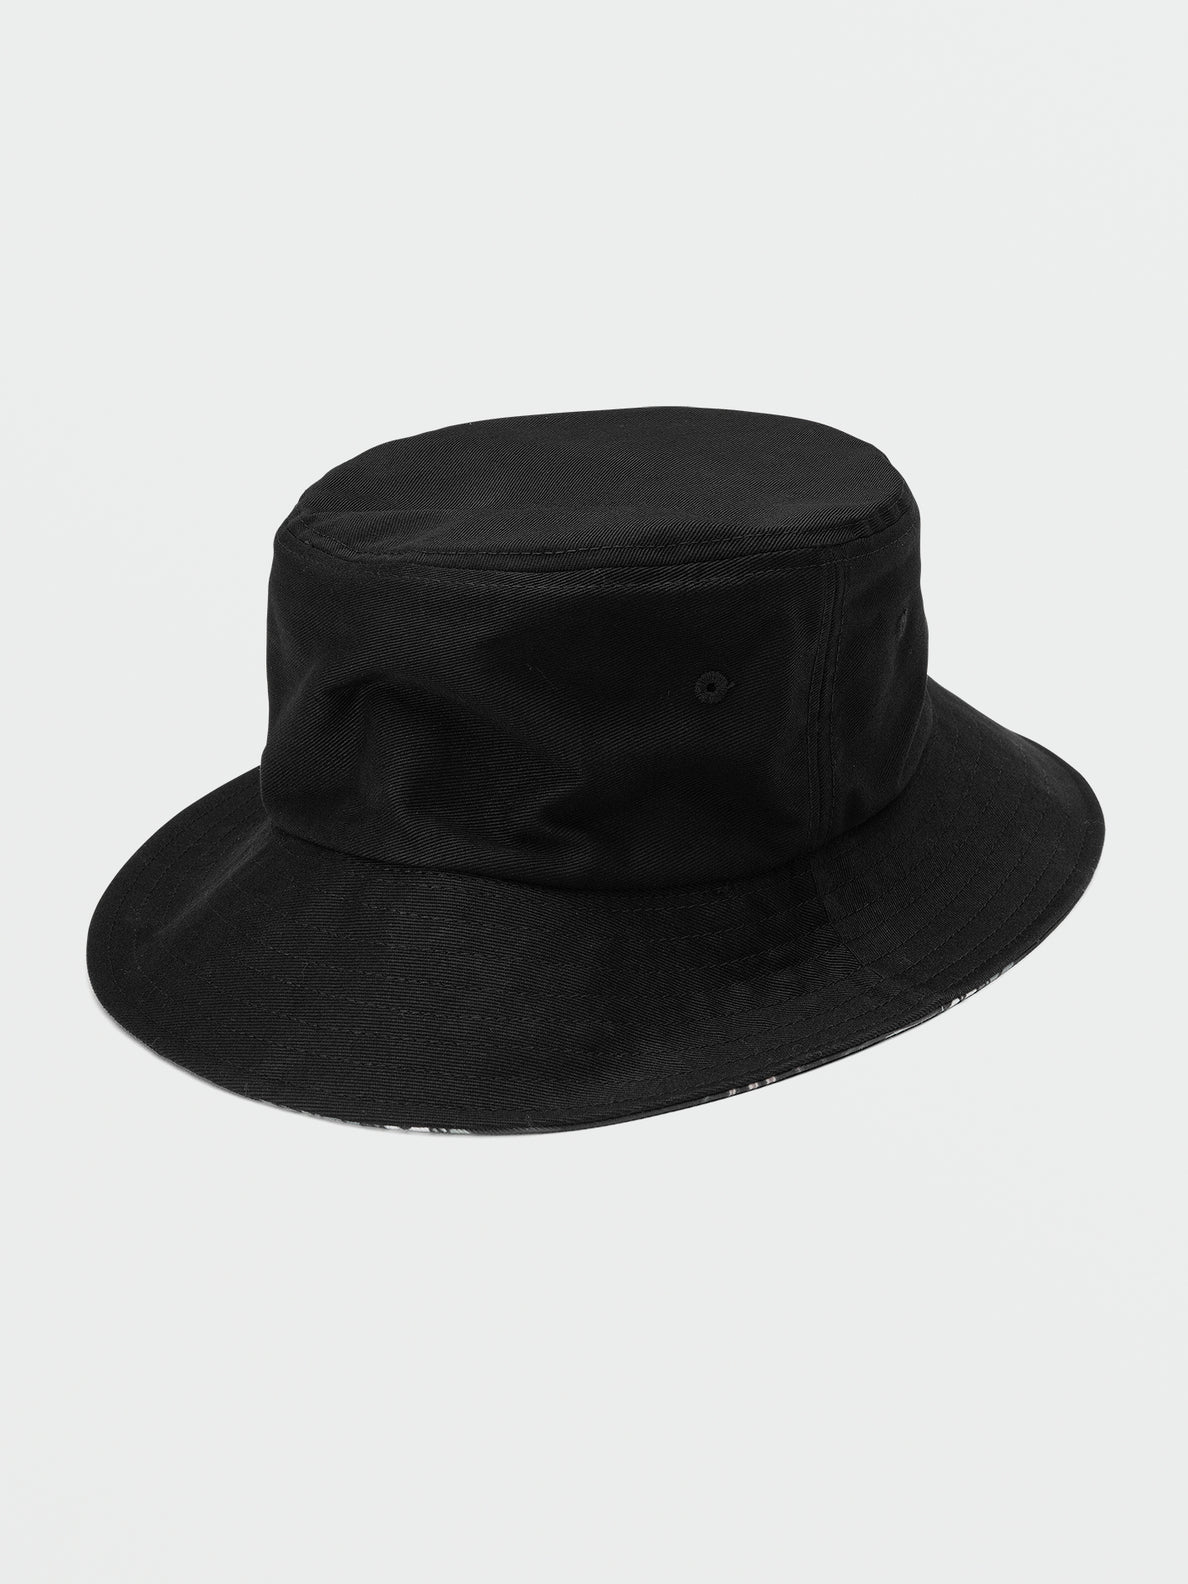 Volcom Entertainment Pepper Bucket Hat - Black